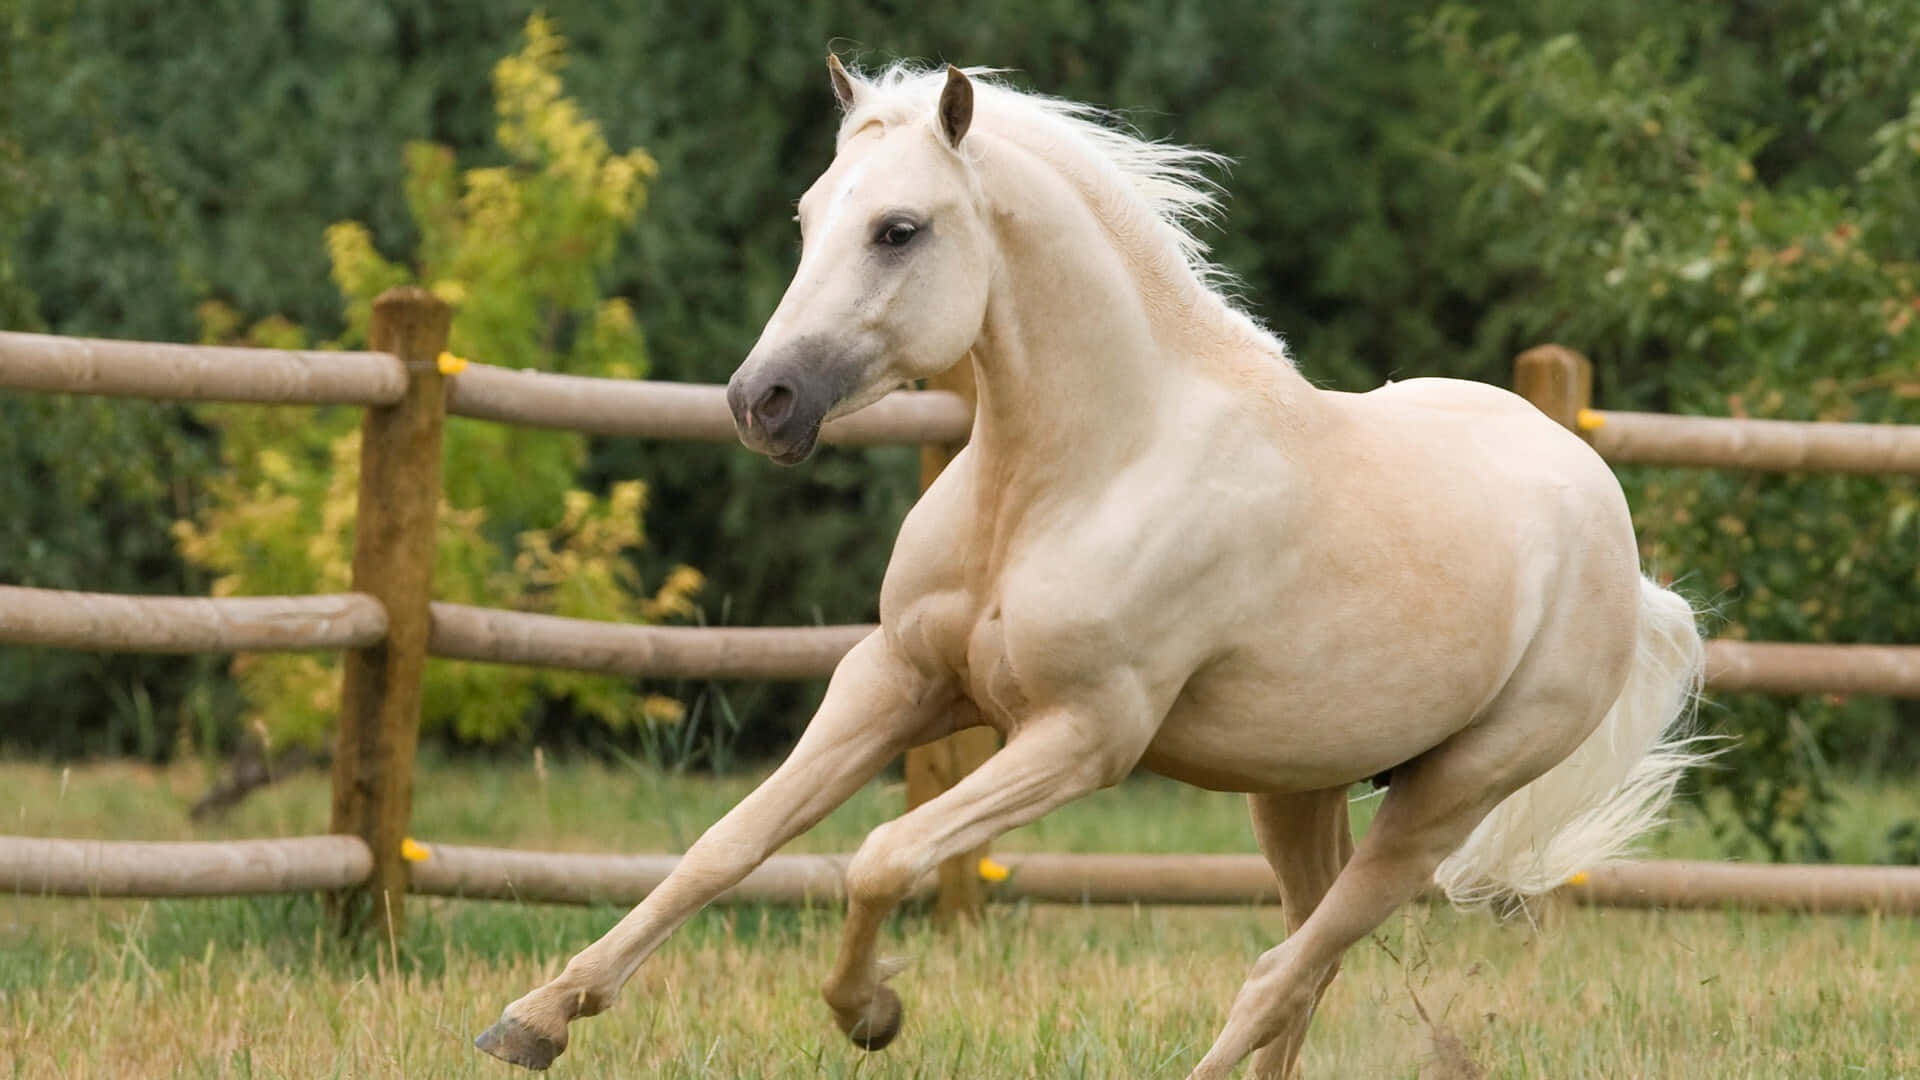 "A Horse Running Through a Meadow"